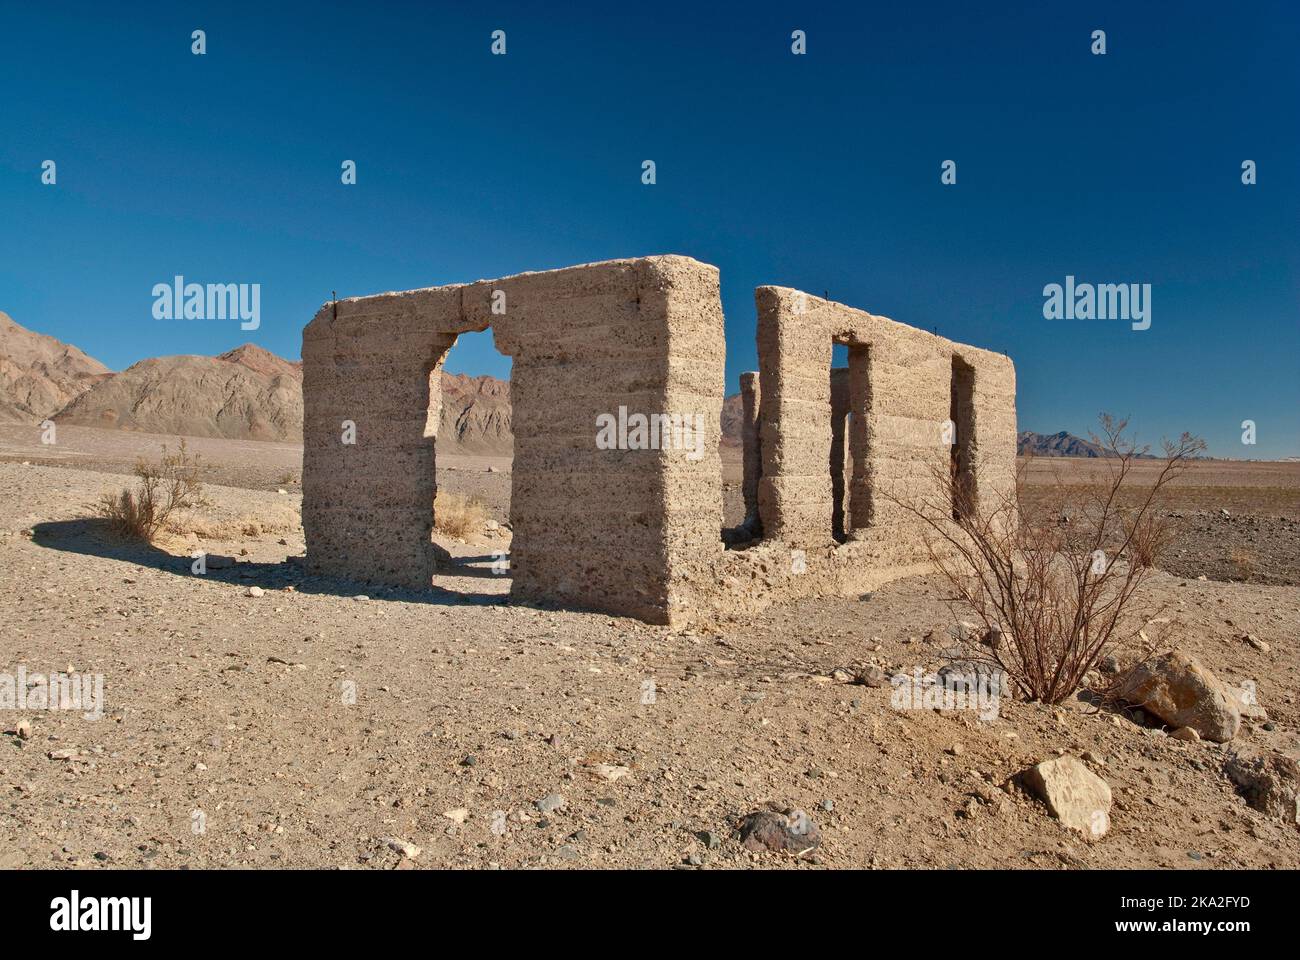 Ashford Mill ruins in Mojave Desert, Death Valley National Park, California, USA Stock Photo